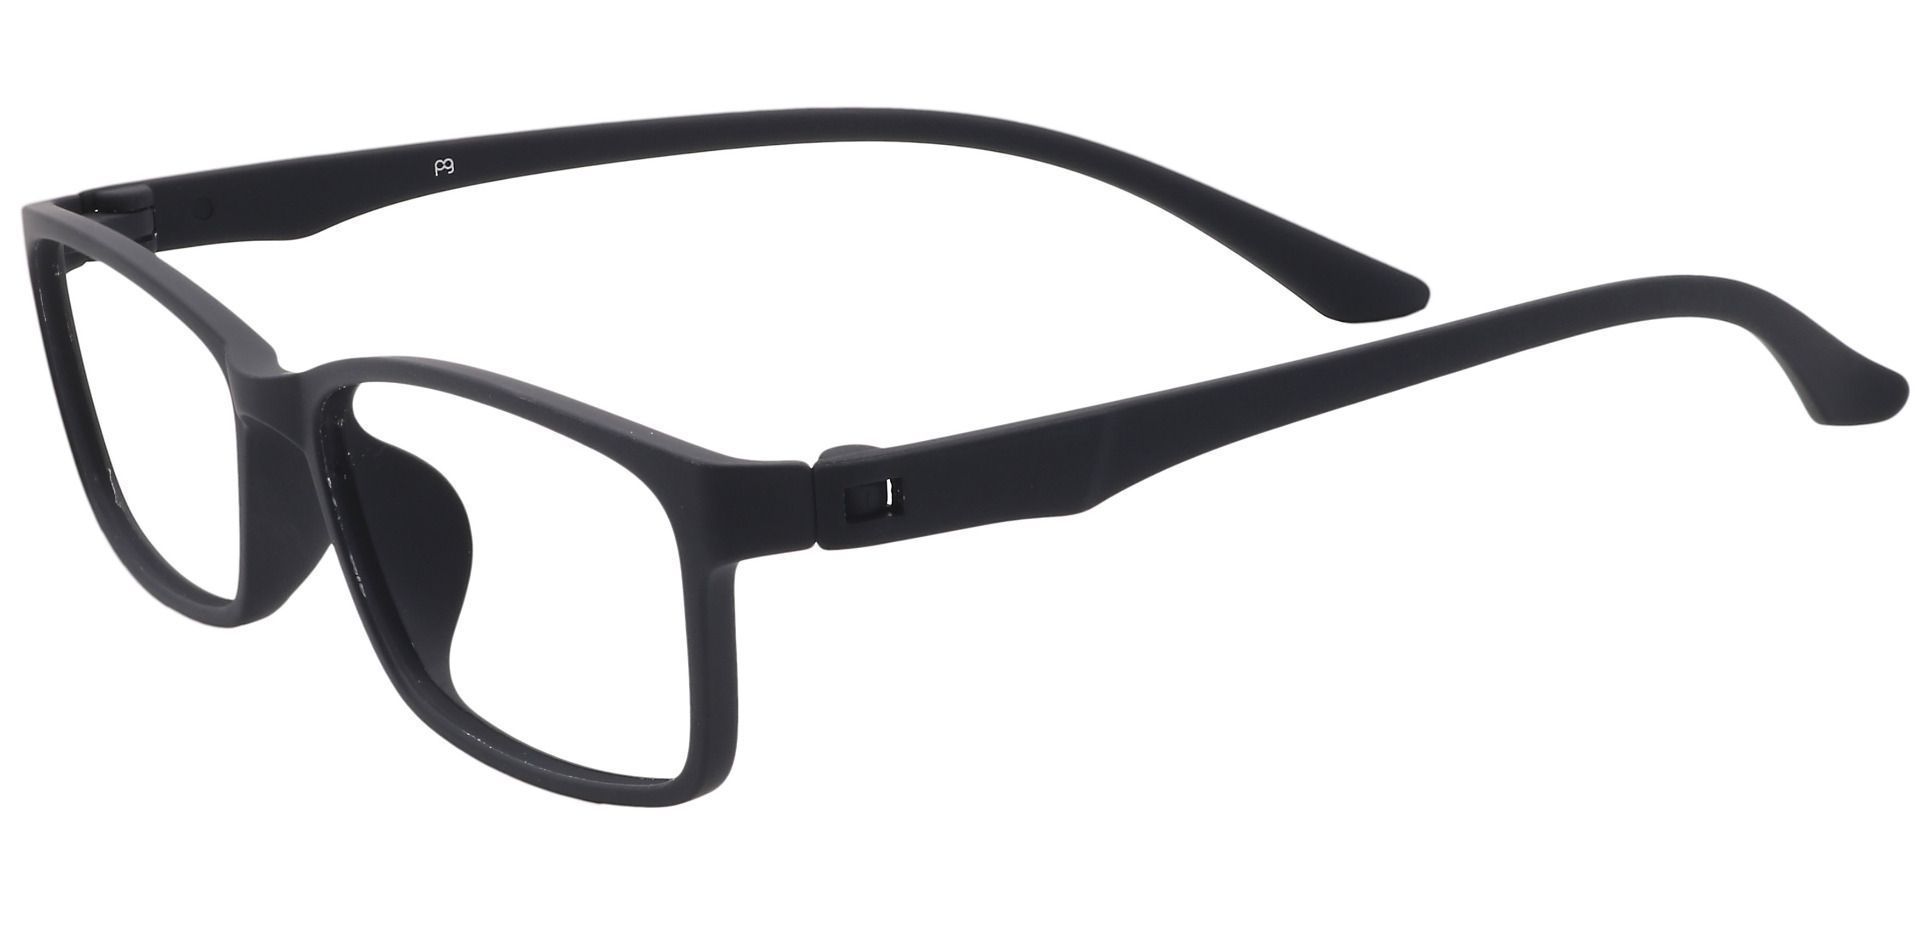 Wichita Rectangle Progressive Glasses -  Matte Black   